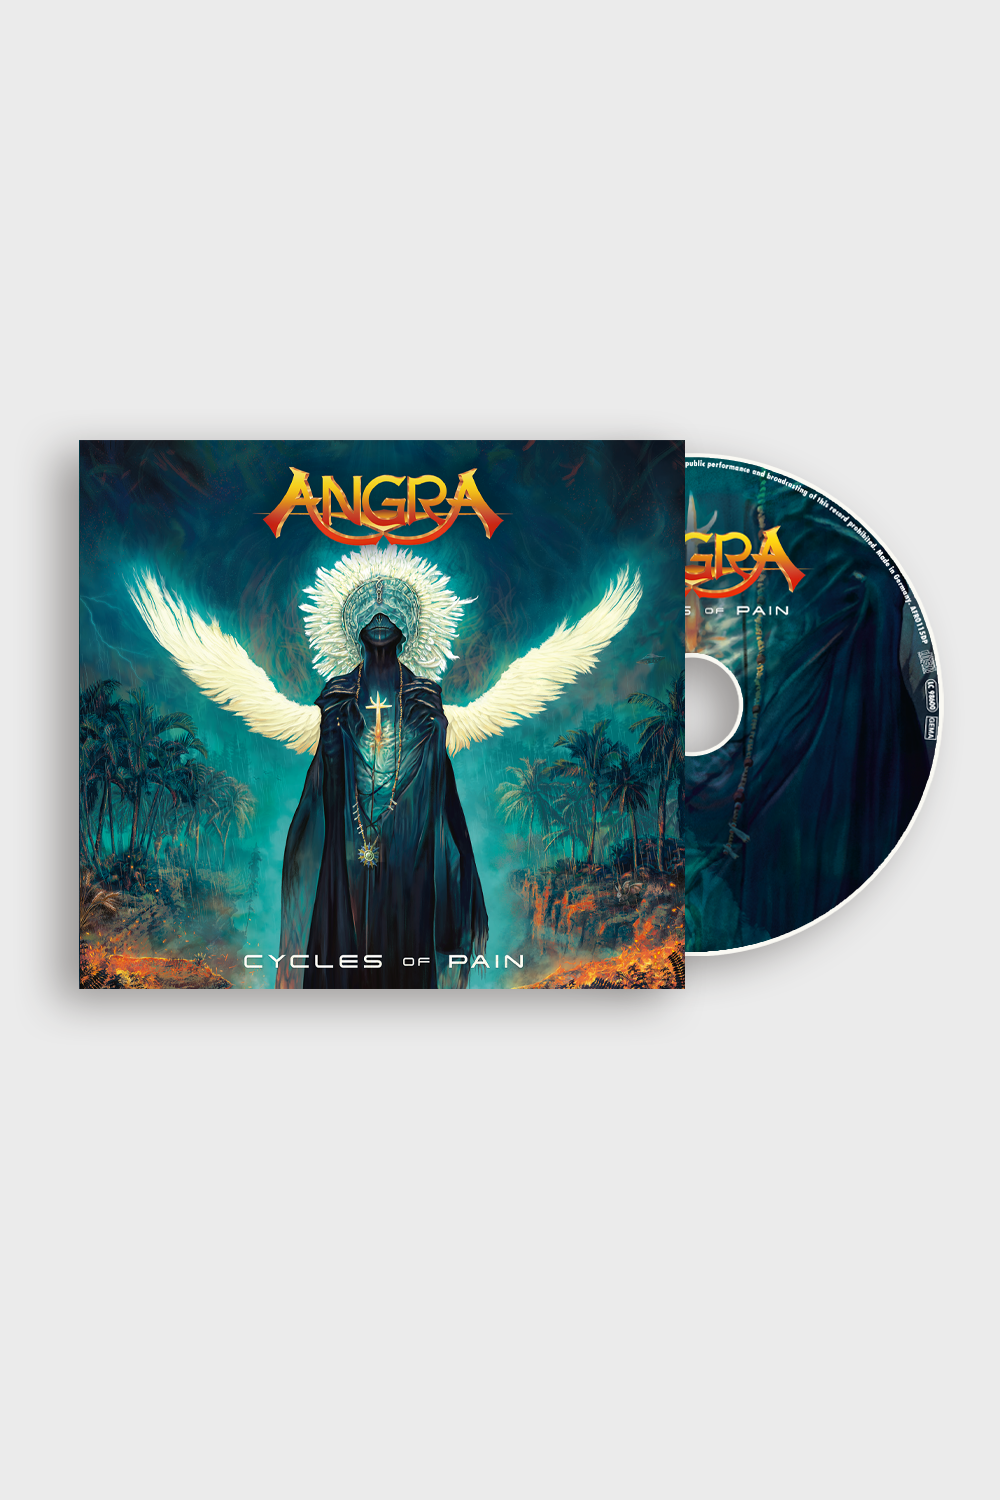 Angra - Cycles of Pain (Ltd Digi)